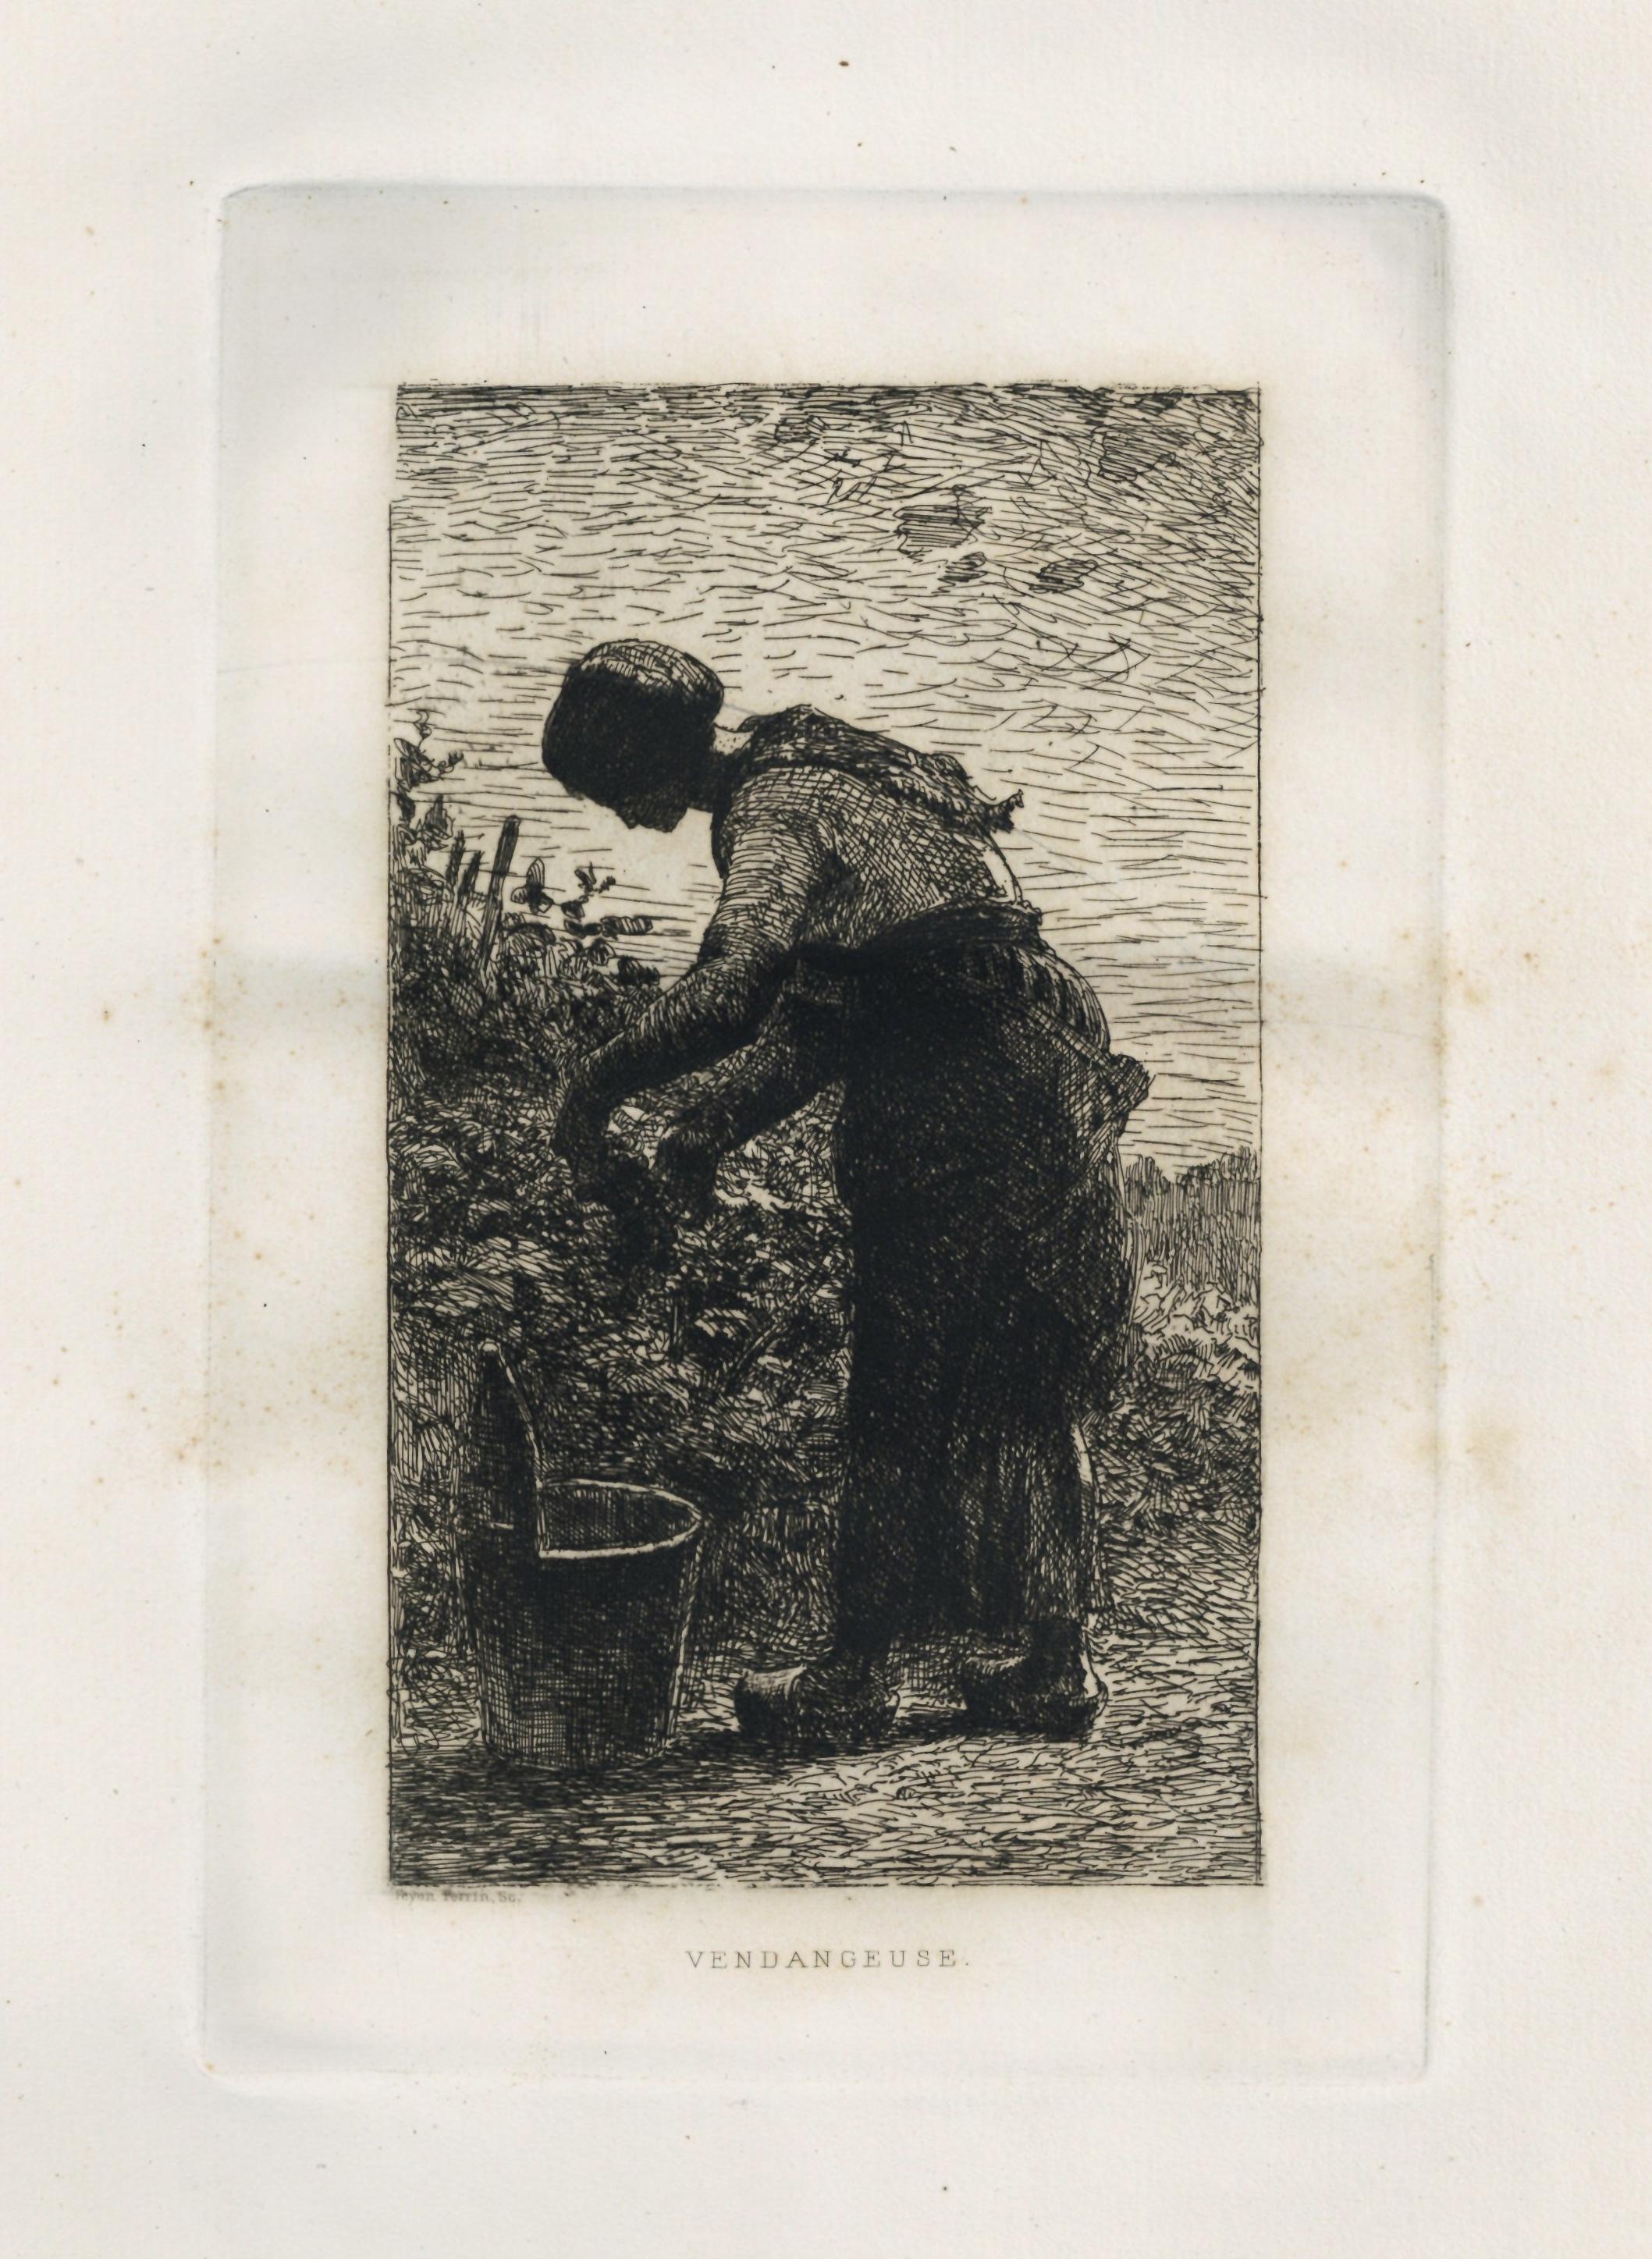 "Vendangeuse" original etching - Print by Francois Auguste Feyen-Perrin